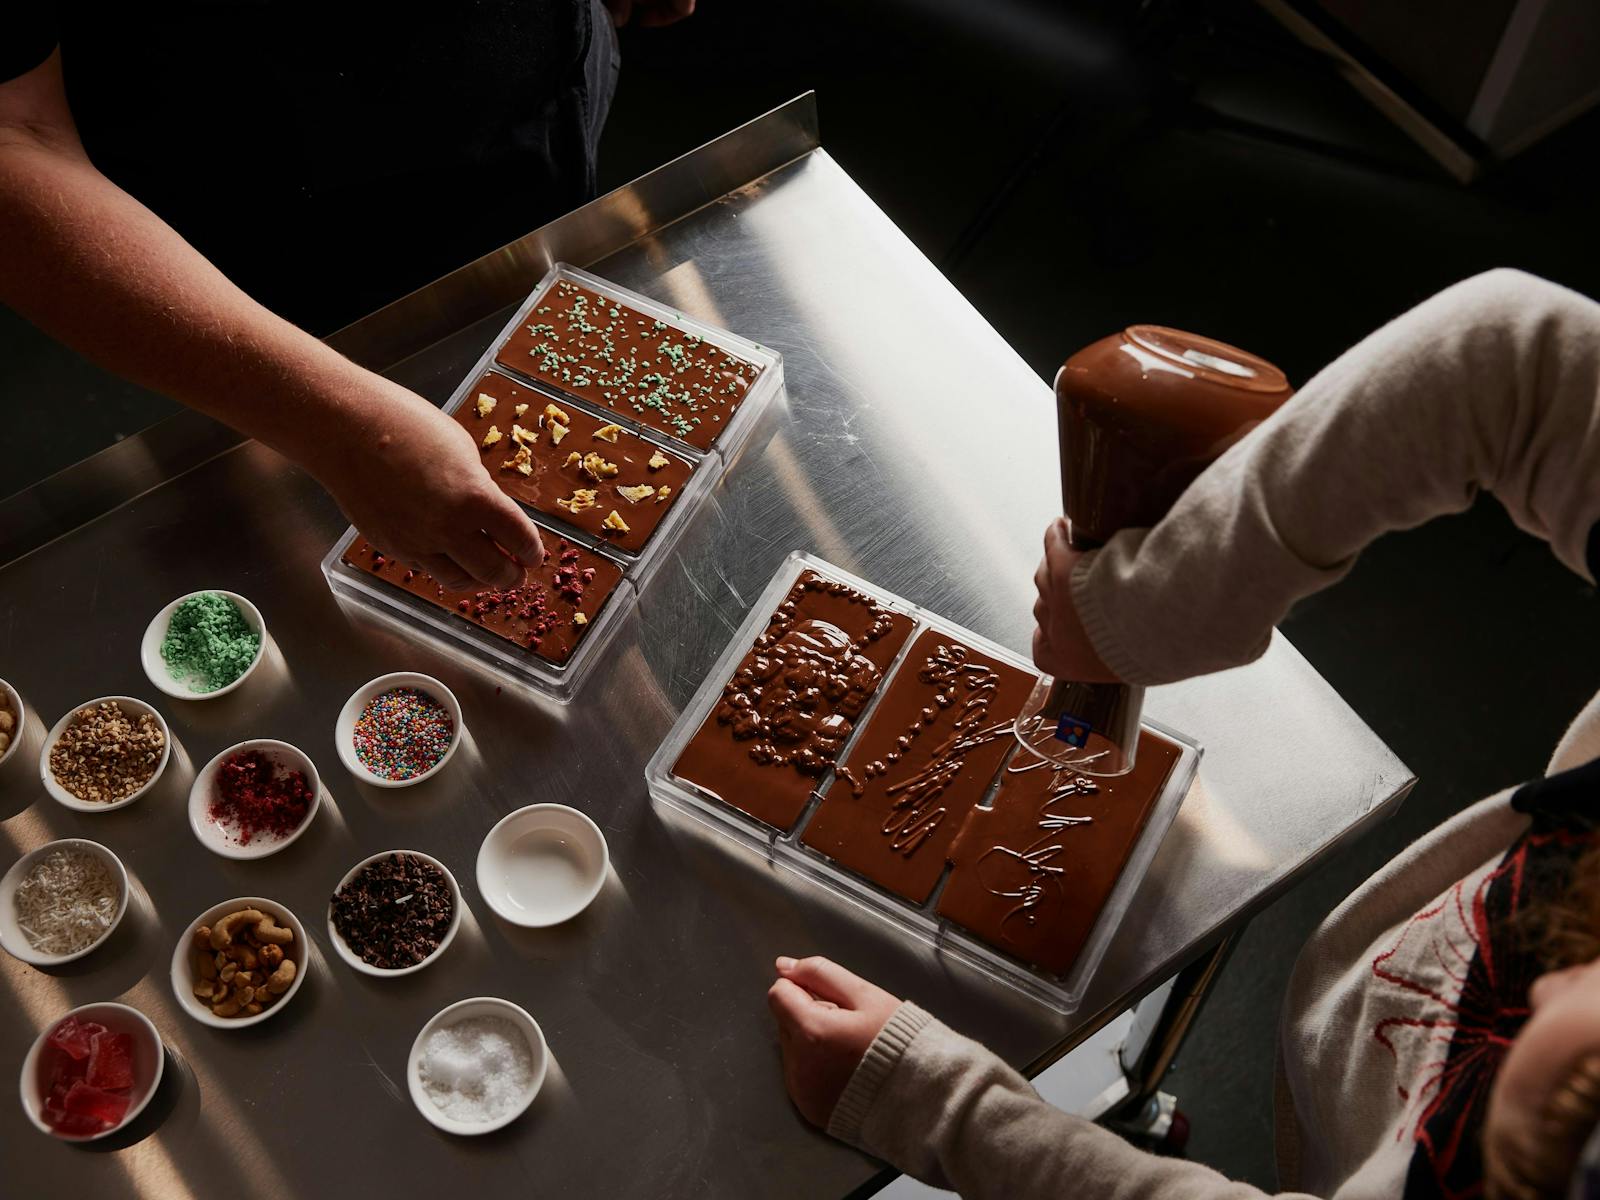 Make your own chocolate blocks